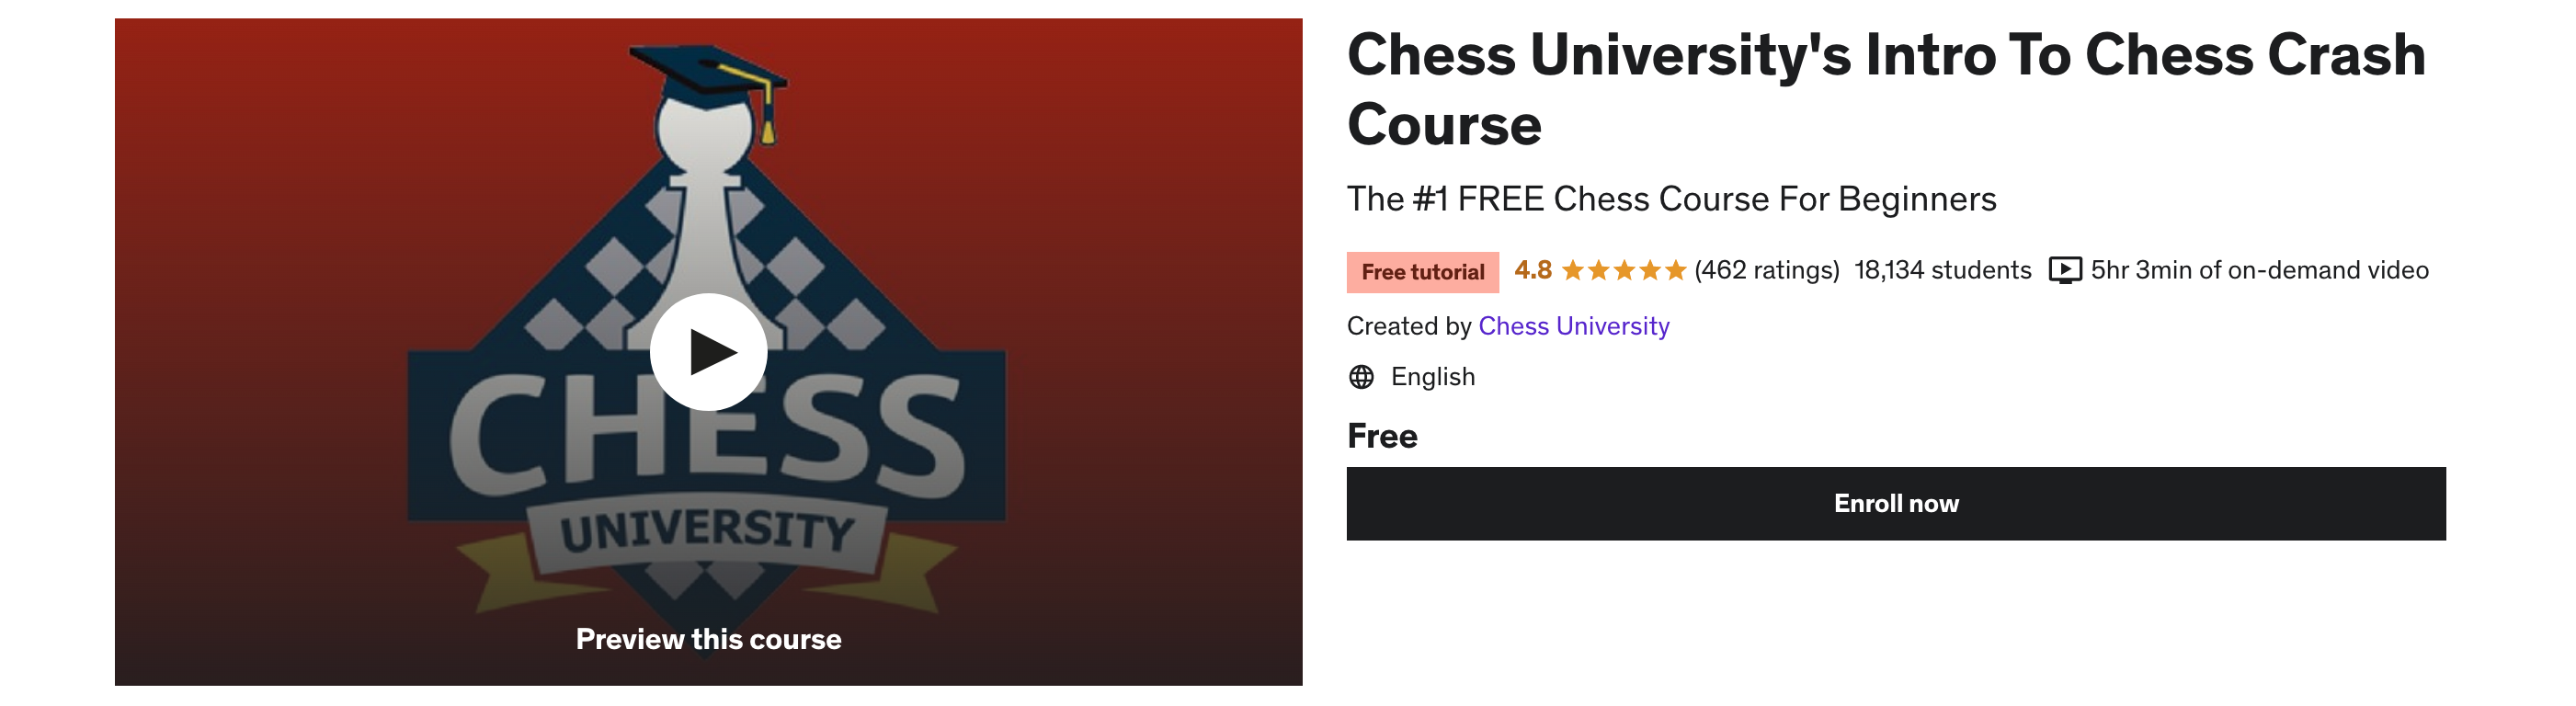 Chess University's Intro To Chess Crash Course